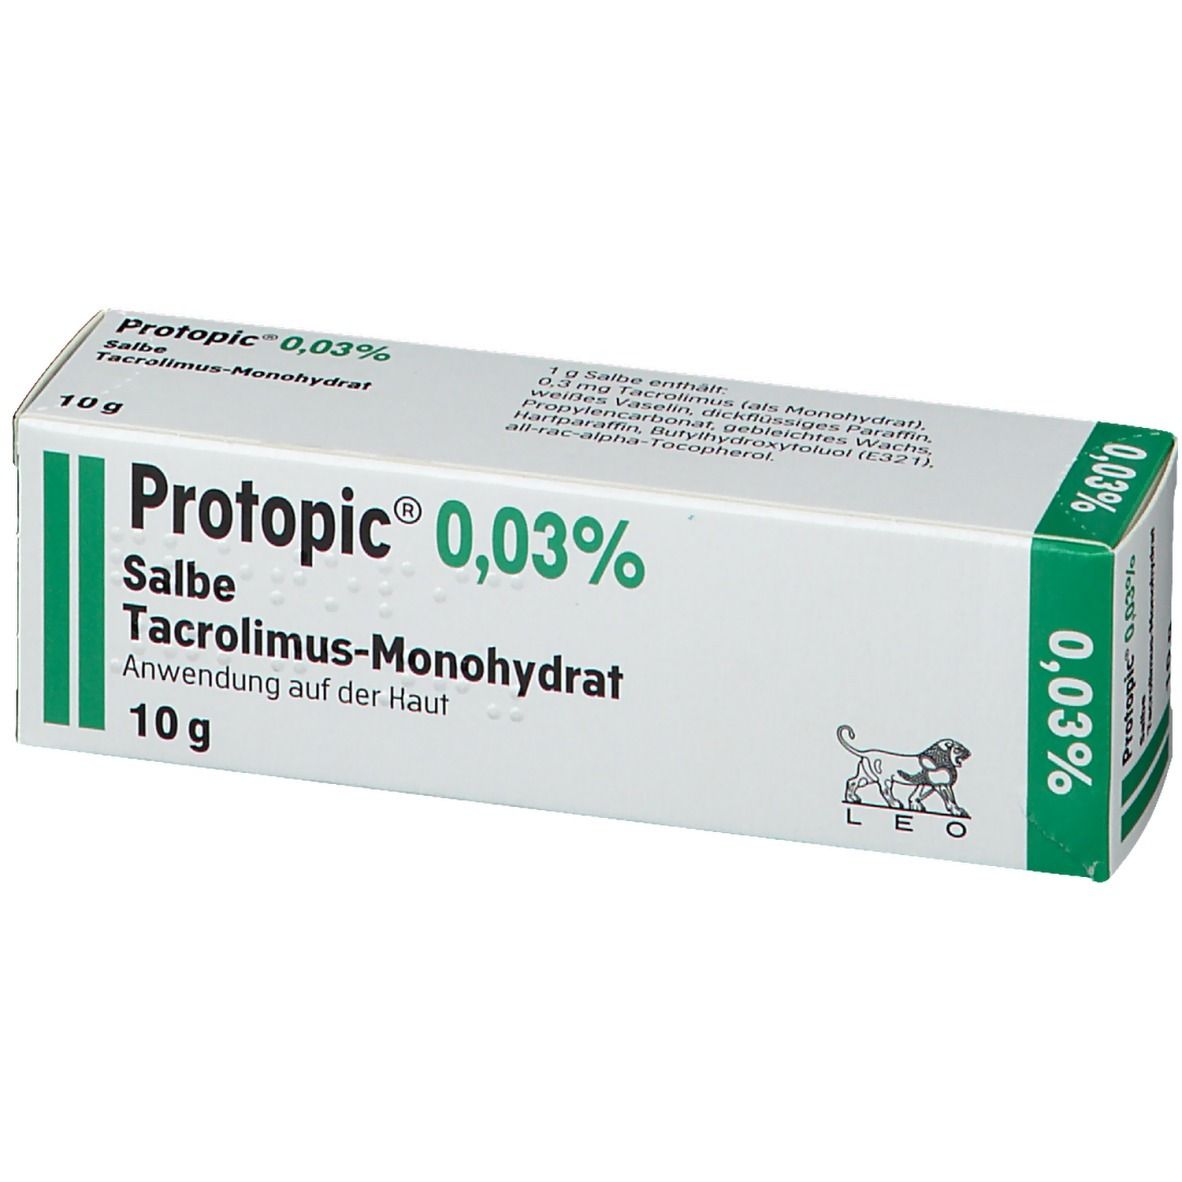 Protopic ® 0,03% Salbe.